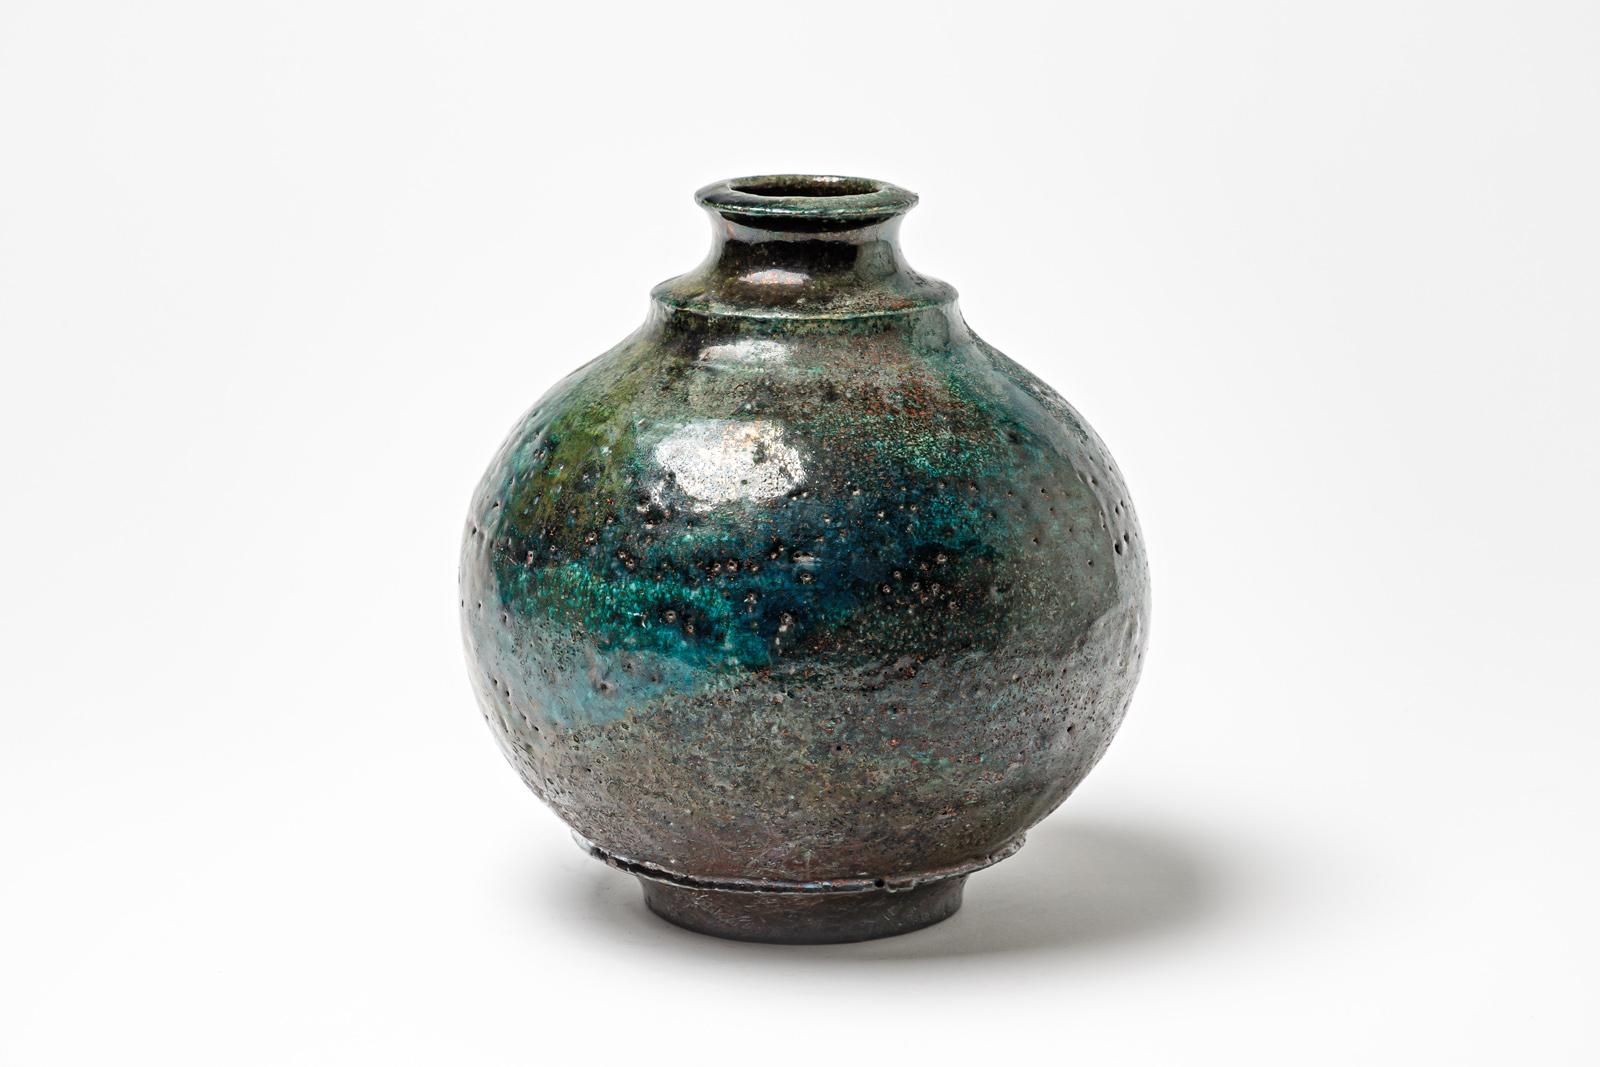 Blue/green glazed ceramic vase by Gisèle Buthod Garçon. 
Raku fired. Artist monogram under the base. Circa 1980-1990. 
H : 8.7’ x 7.1’ inches.